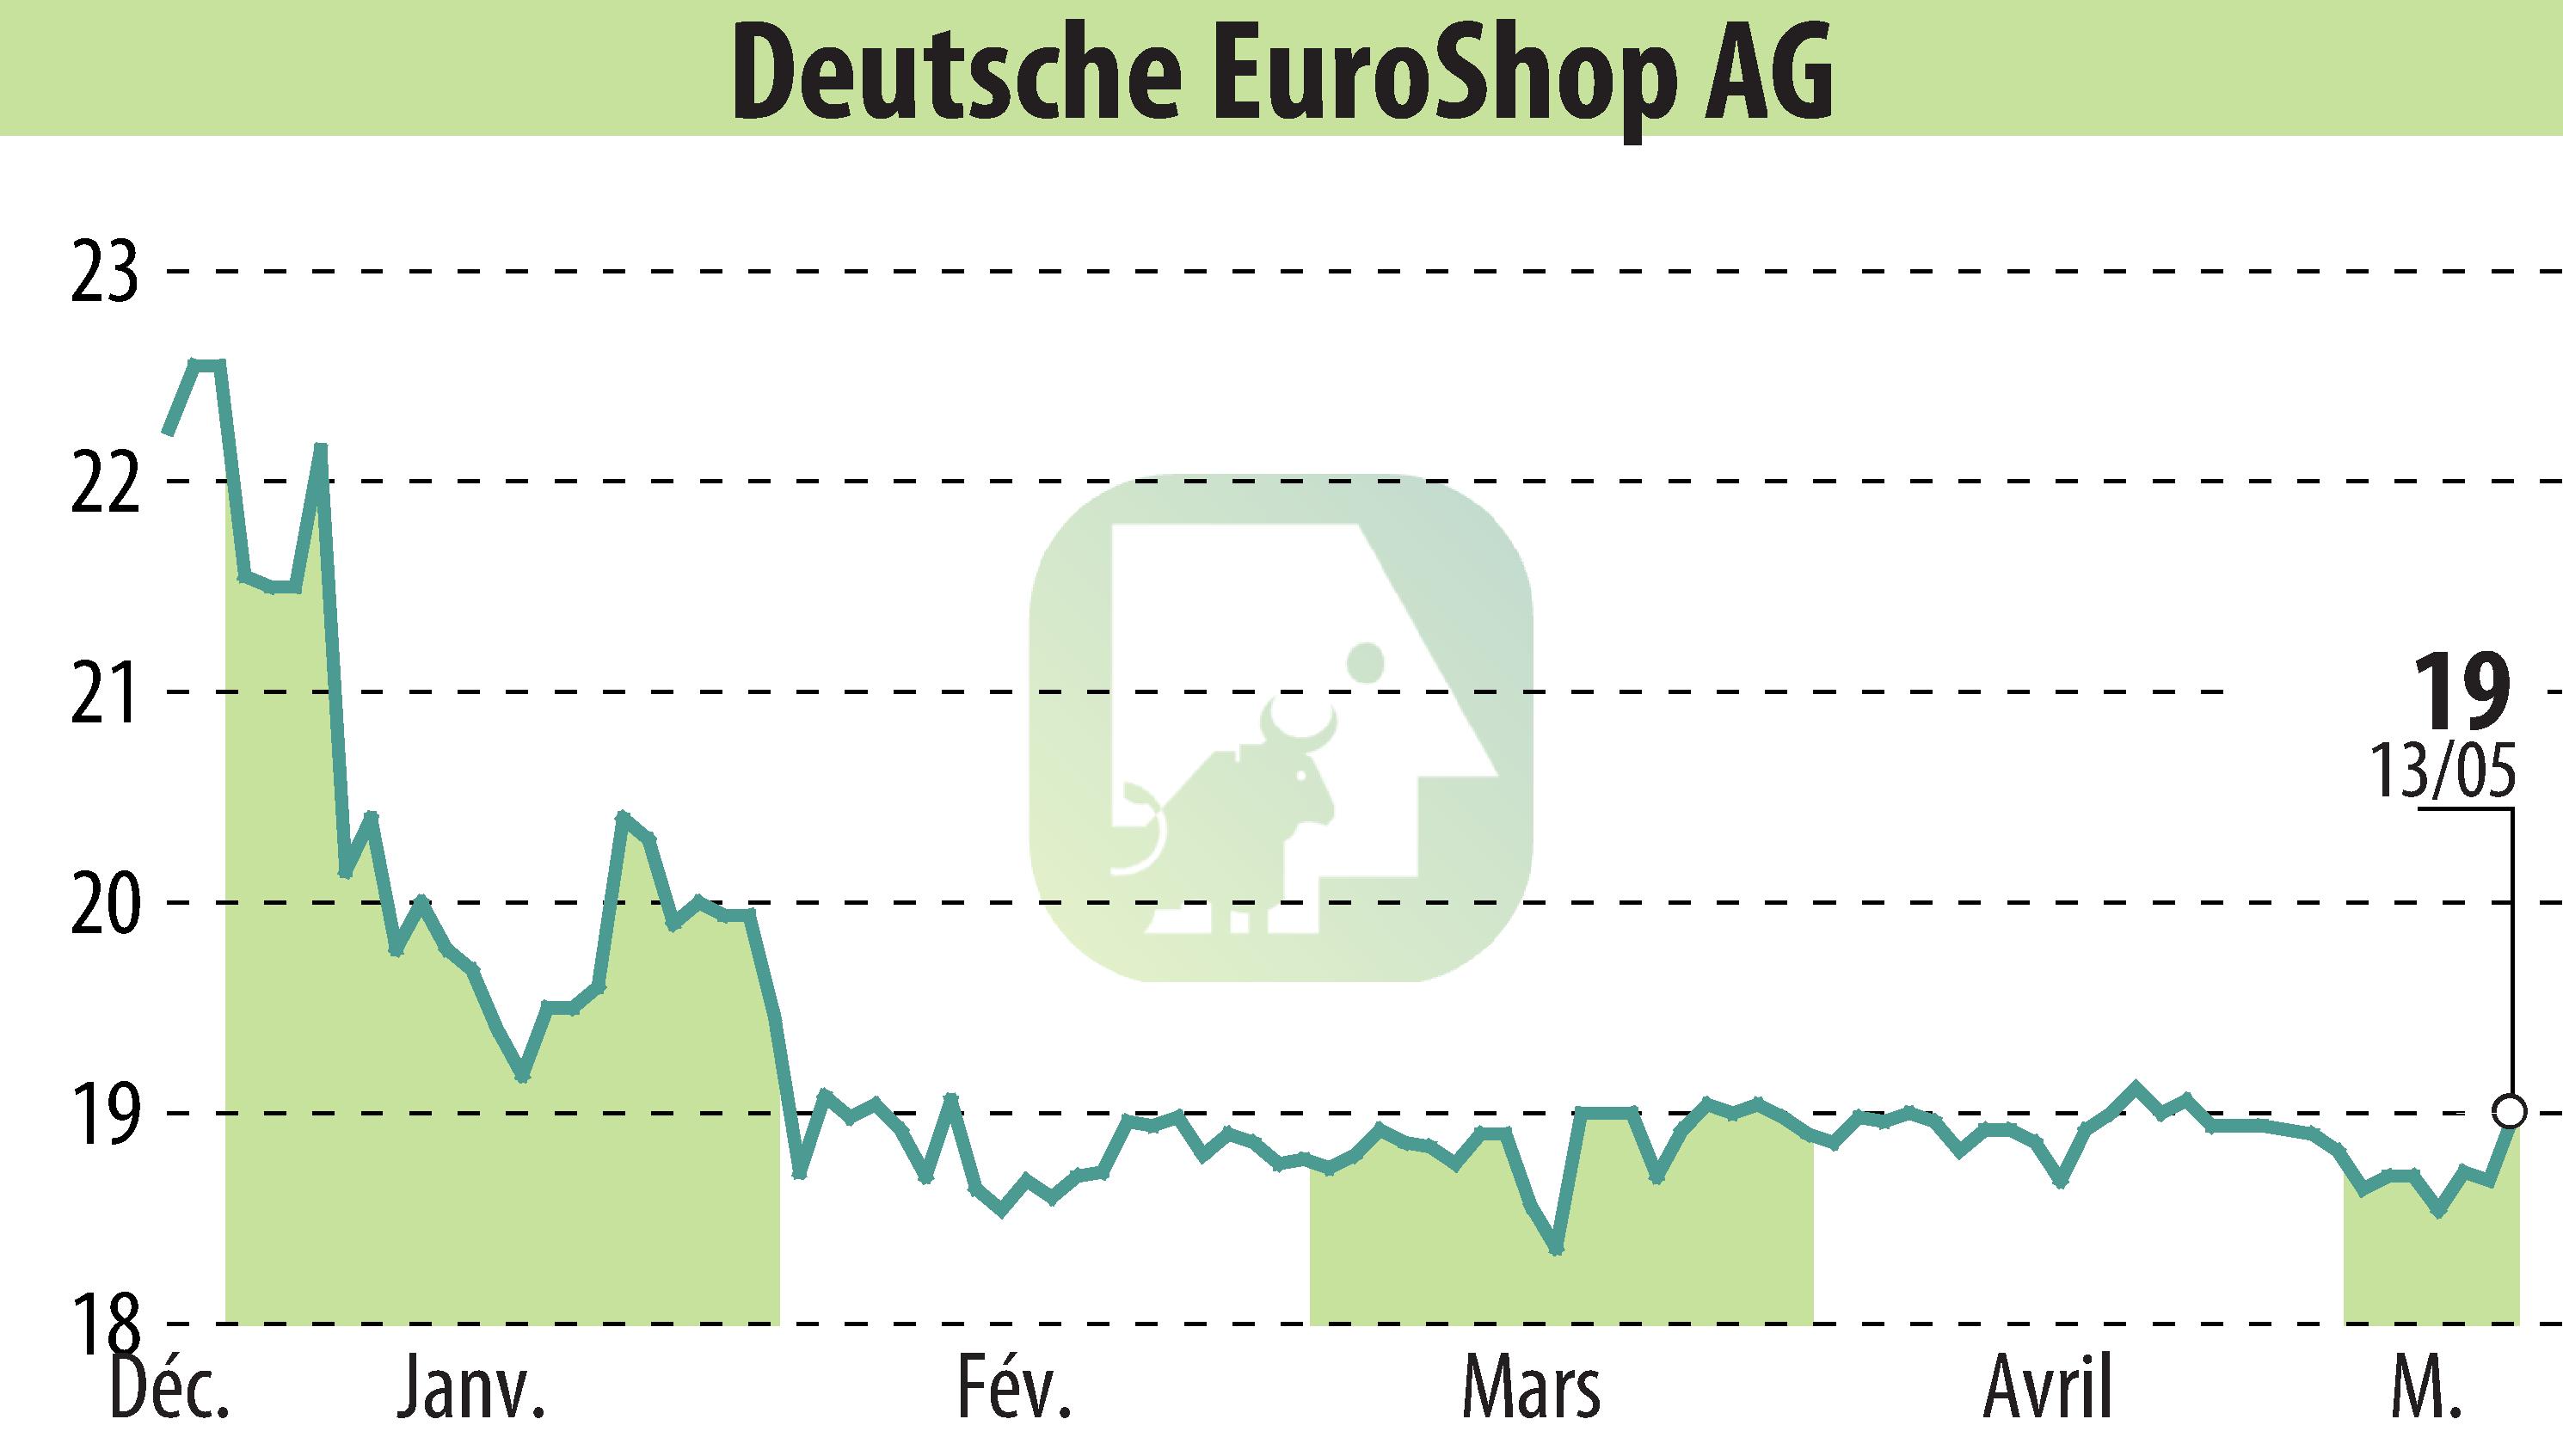 Stock price chart of Deutsche EuroShop AG (EBR:DEQ) showing fluctuations.